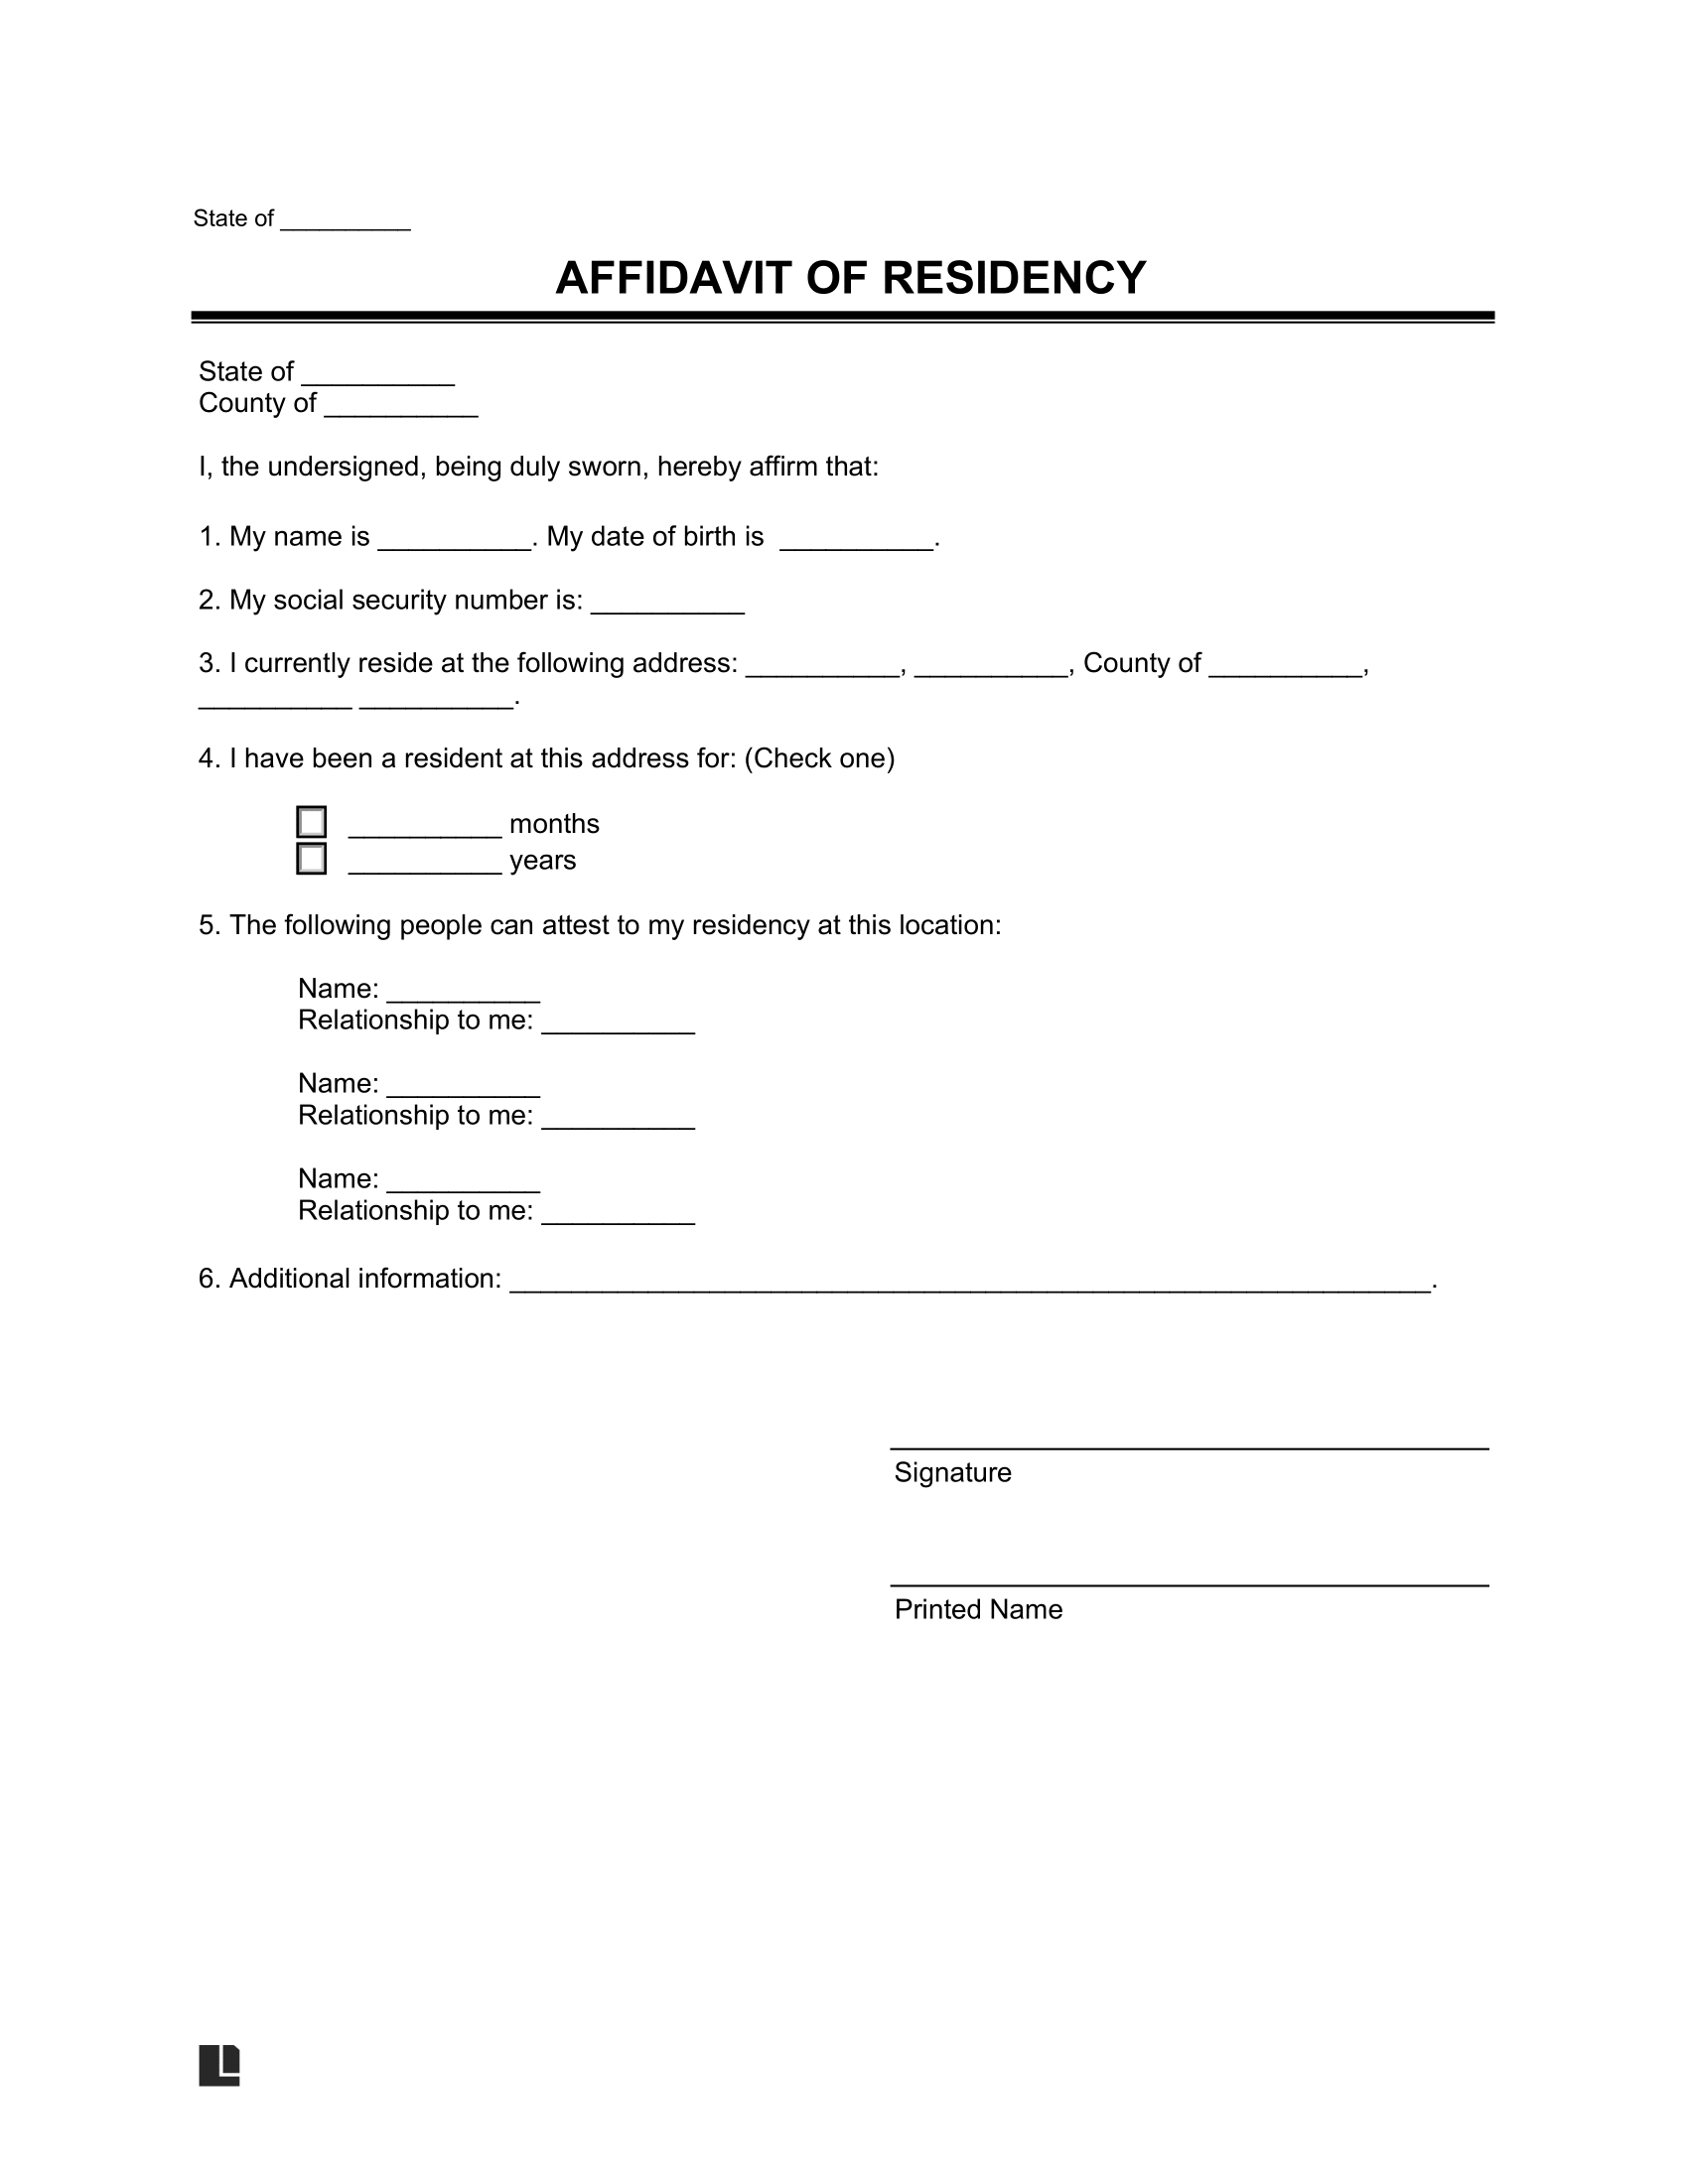 Affidavit of Residency Template